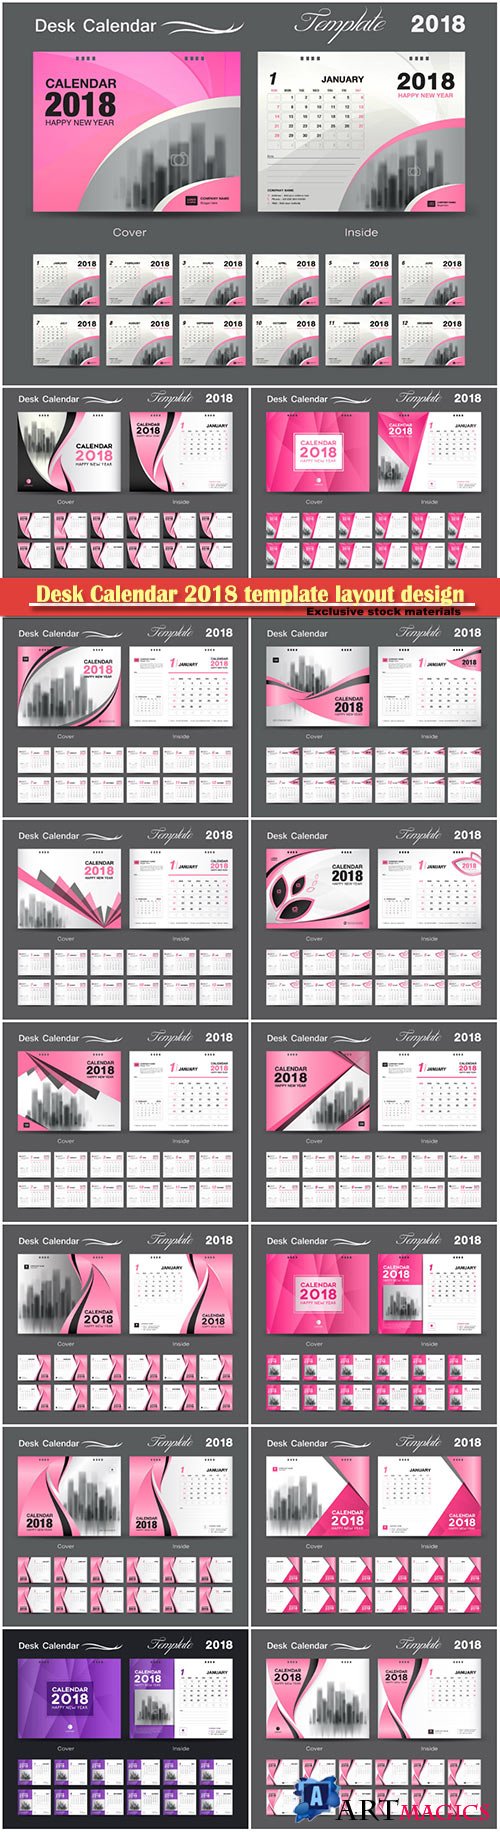 Desk Calendar 2018 template layout design, cover set of 12 months